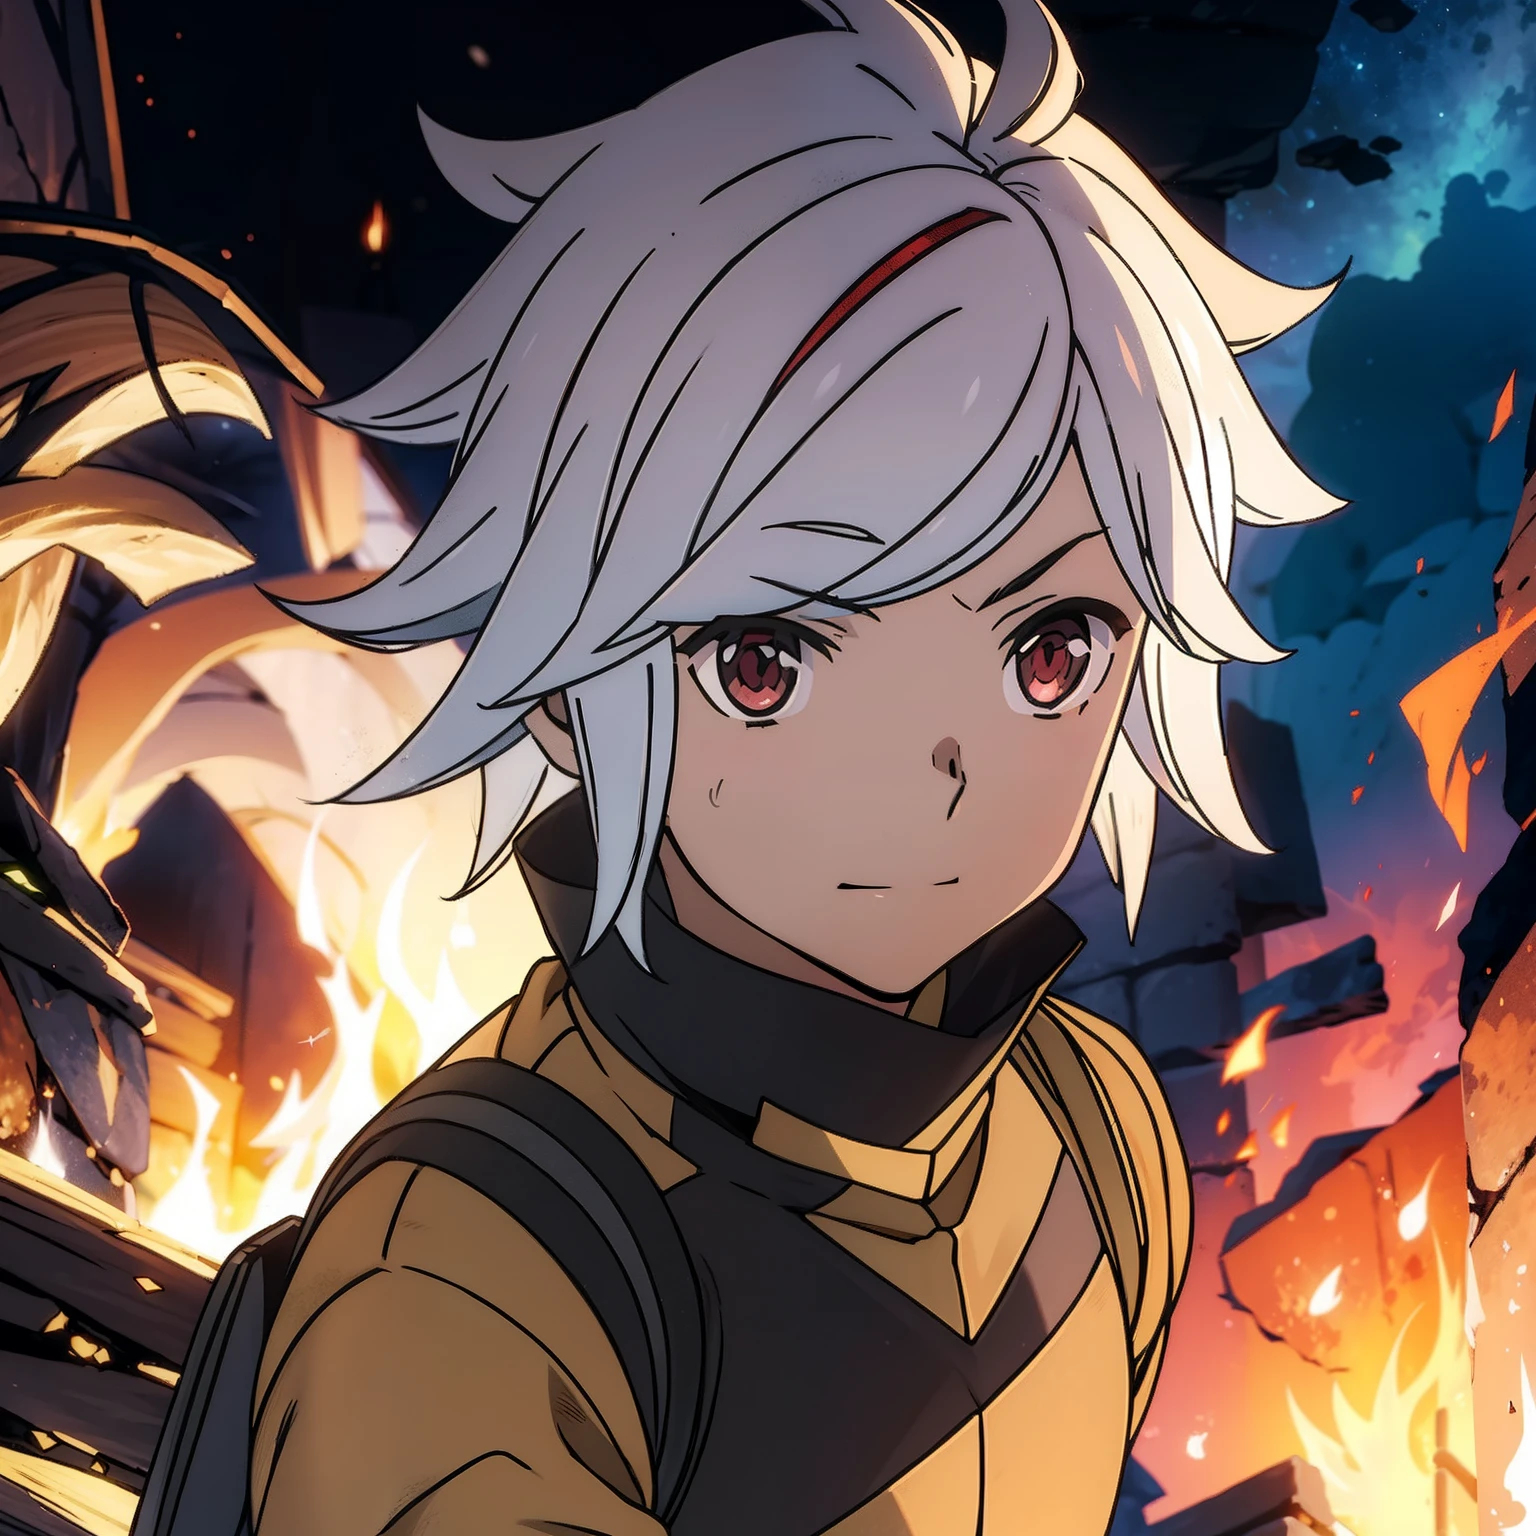 Boy Anime, 1 boy, white  hair, Eyes red, fire sword, night background, magic staff, heavy armor, lightning strikes